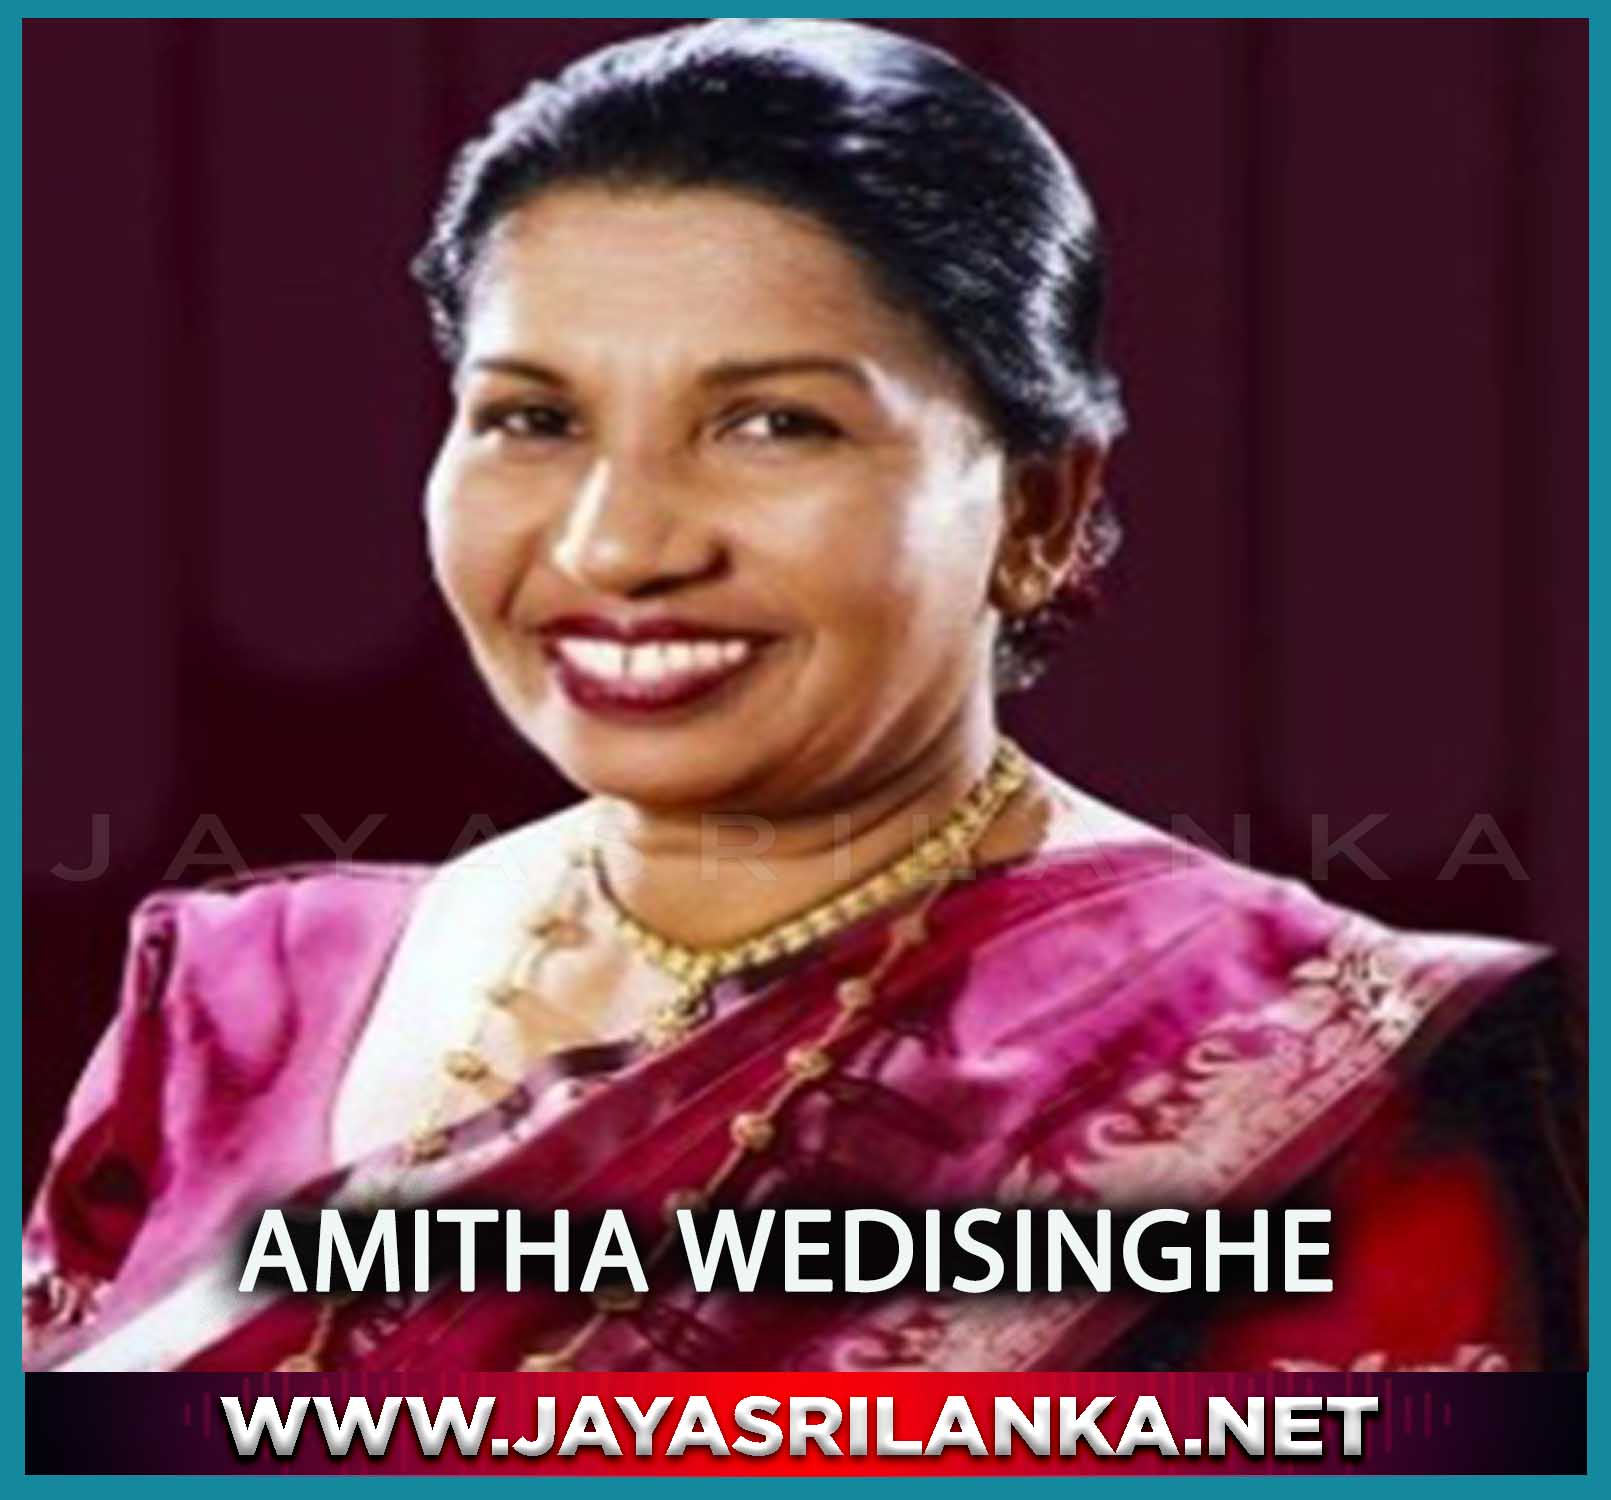 Isuru Suwaya Athaharala - Amitha Wedisinghe mp3 Image